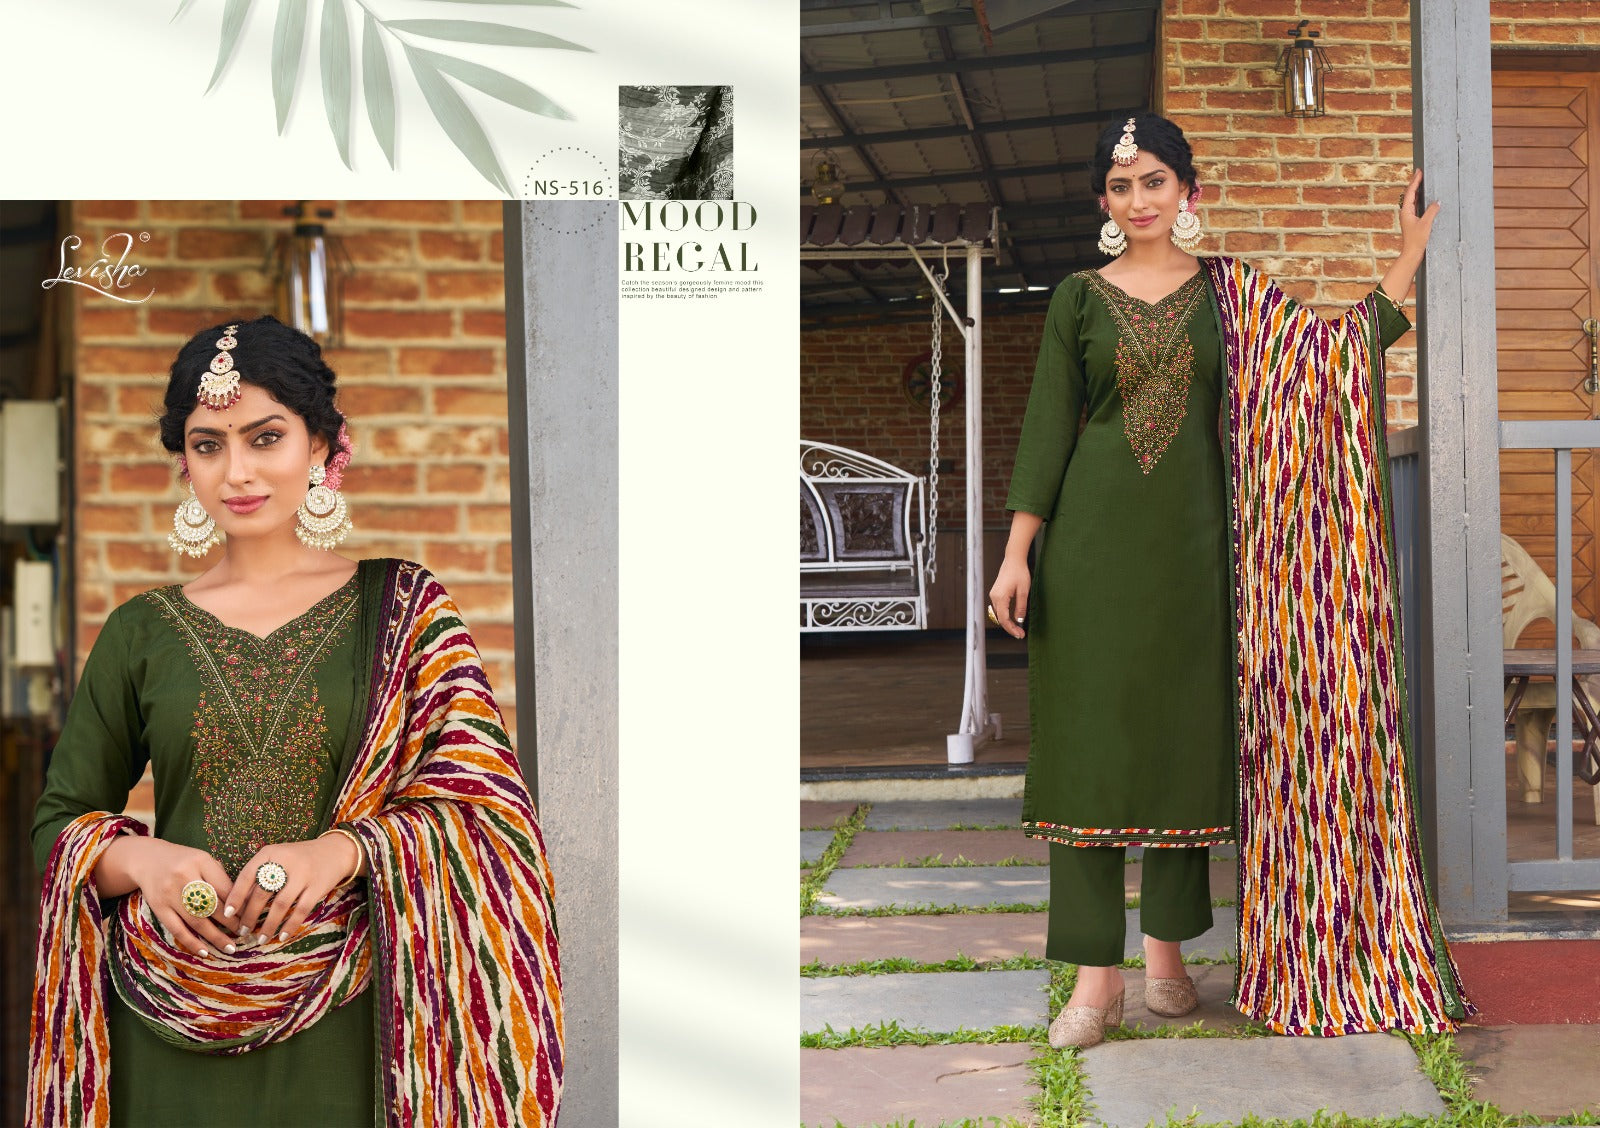 levisha nivisha vol 7 rayon slub with embroidery work salwar kameez latest collection - jilaniwholesalesuit